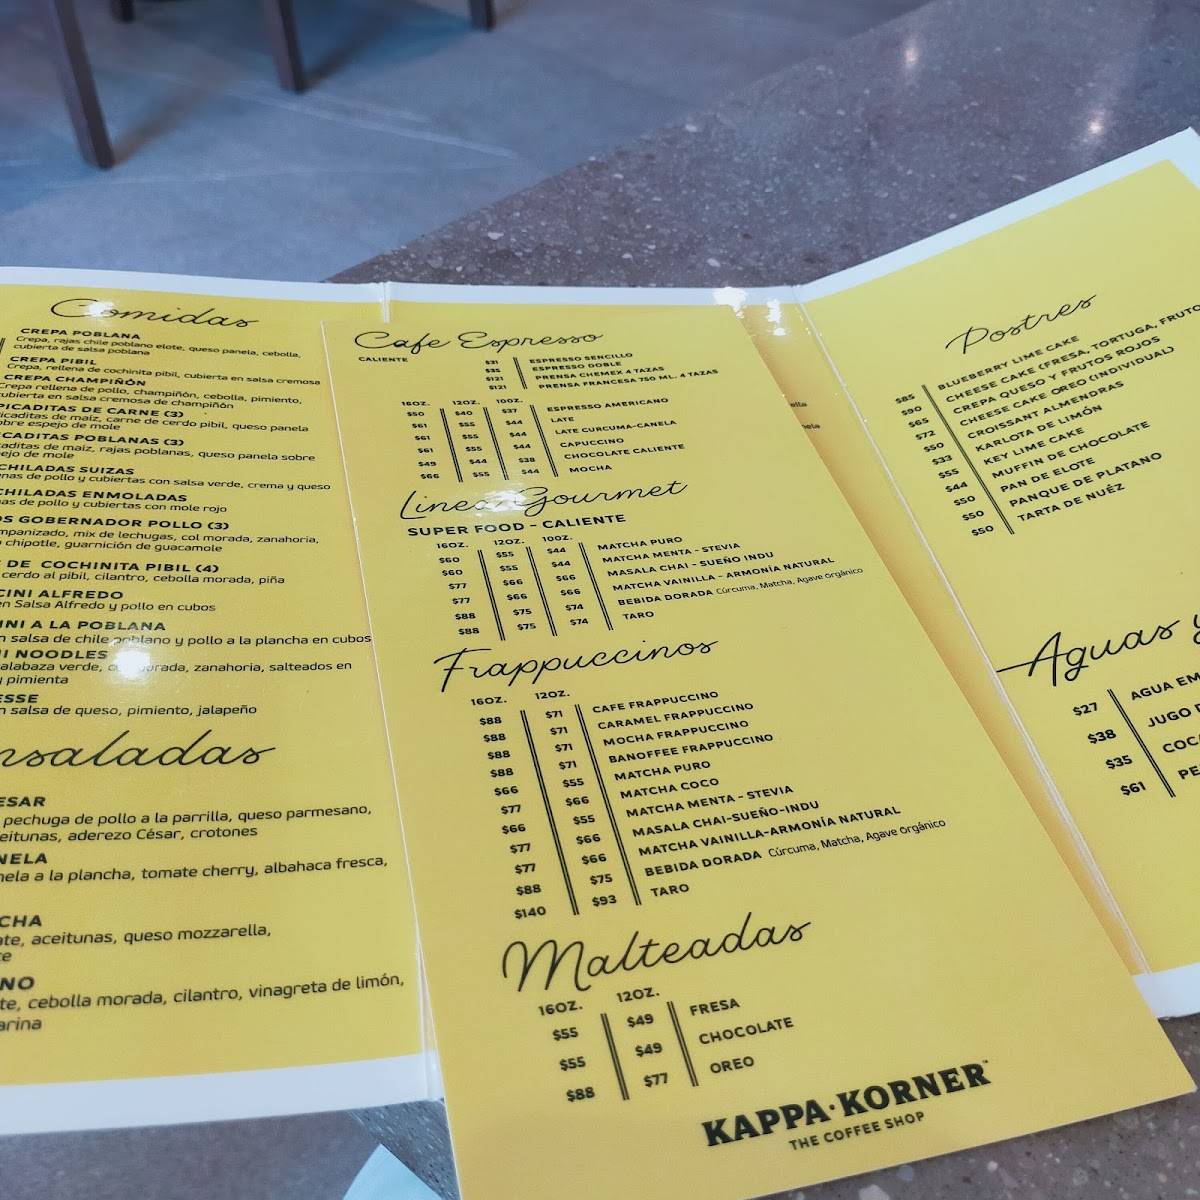 Bogholder Mediator Examen album Menu at Kappa Korner restaurant, Monterrey, 1a Avenida 207-Local 115